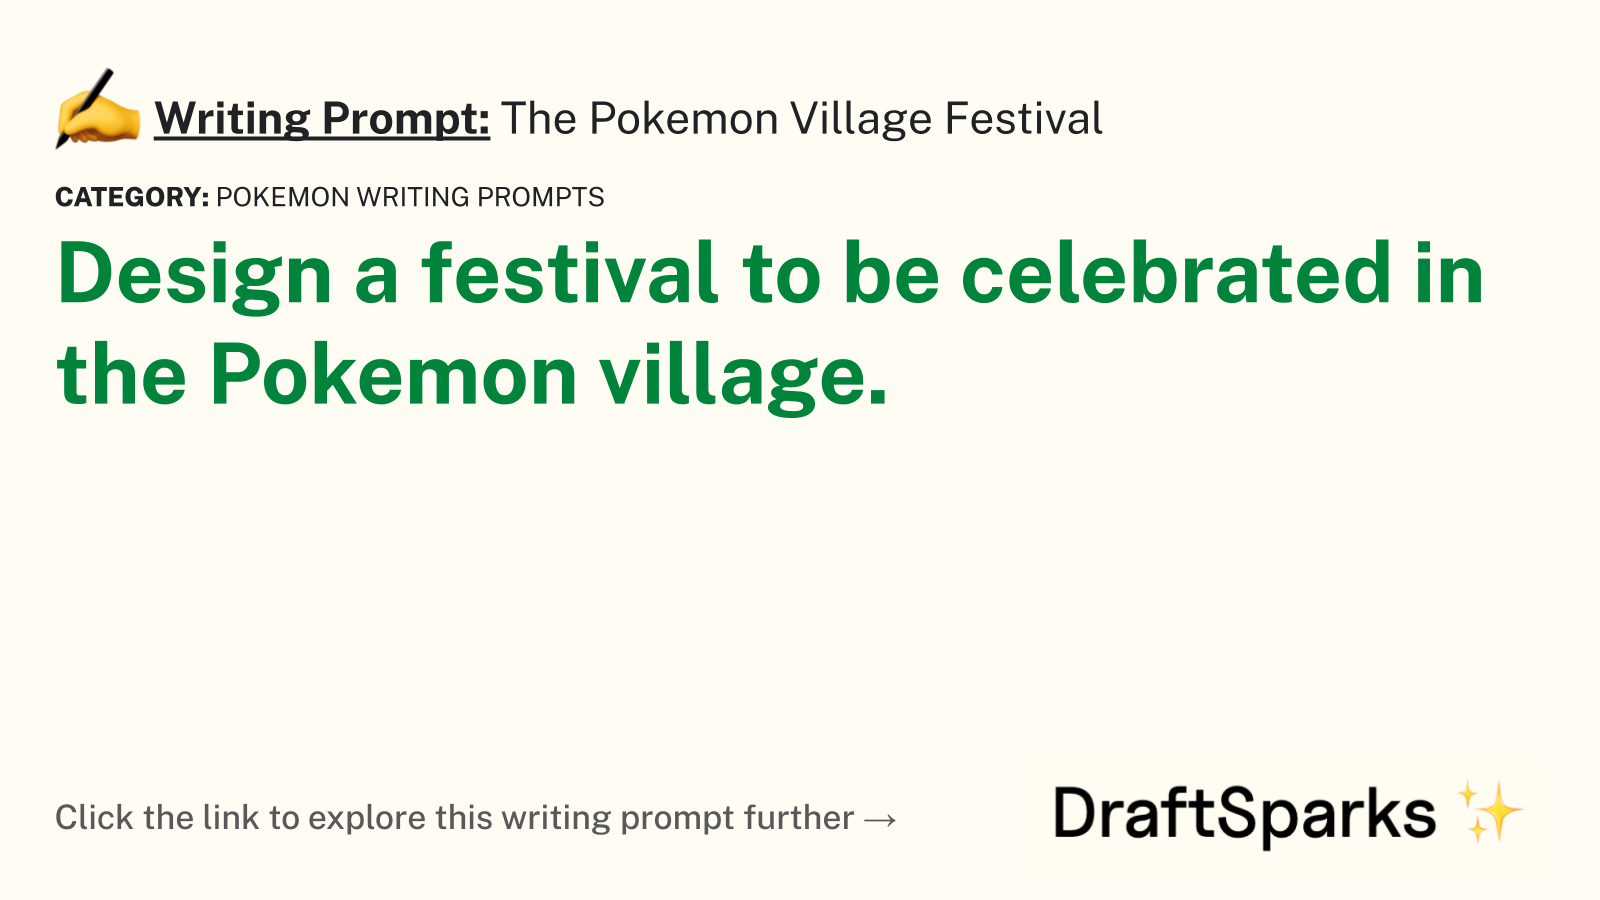 The Pokemon Village Festival